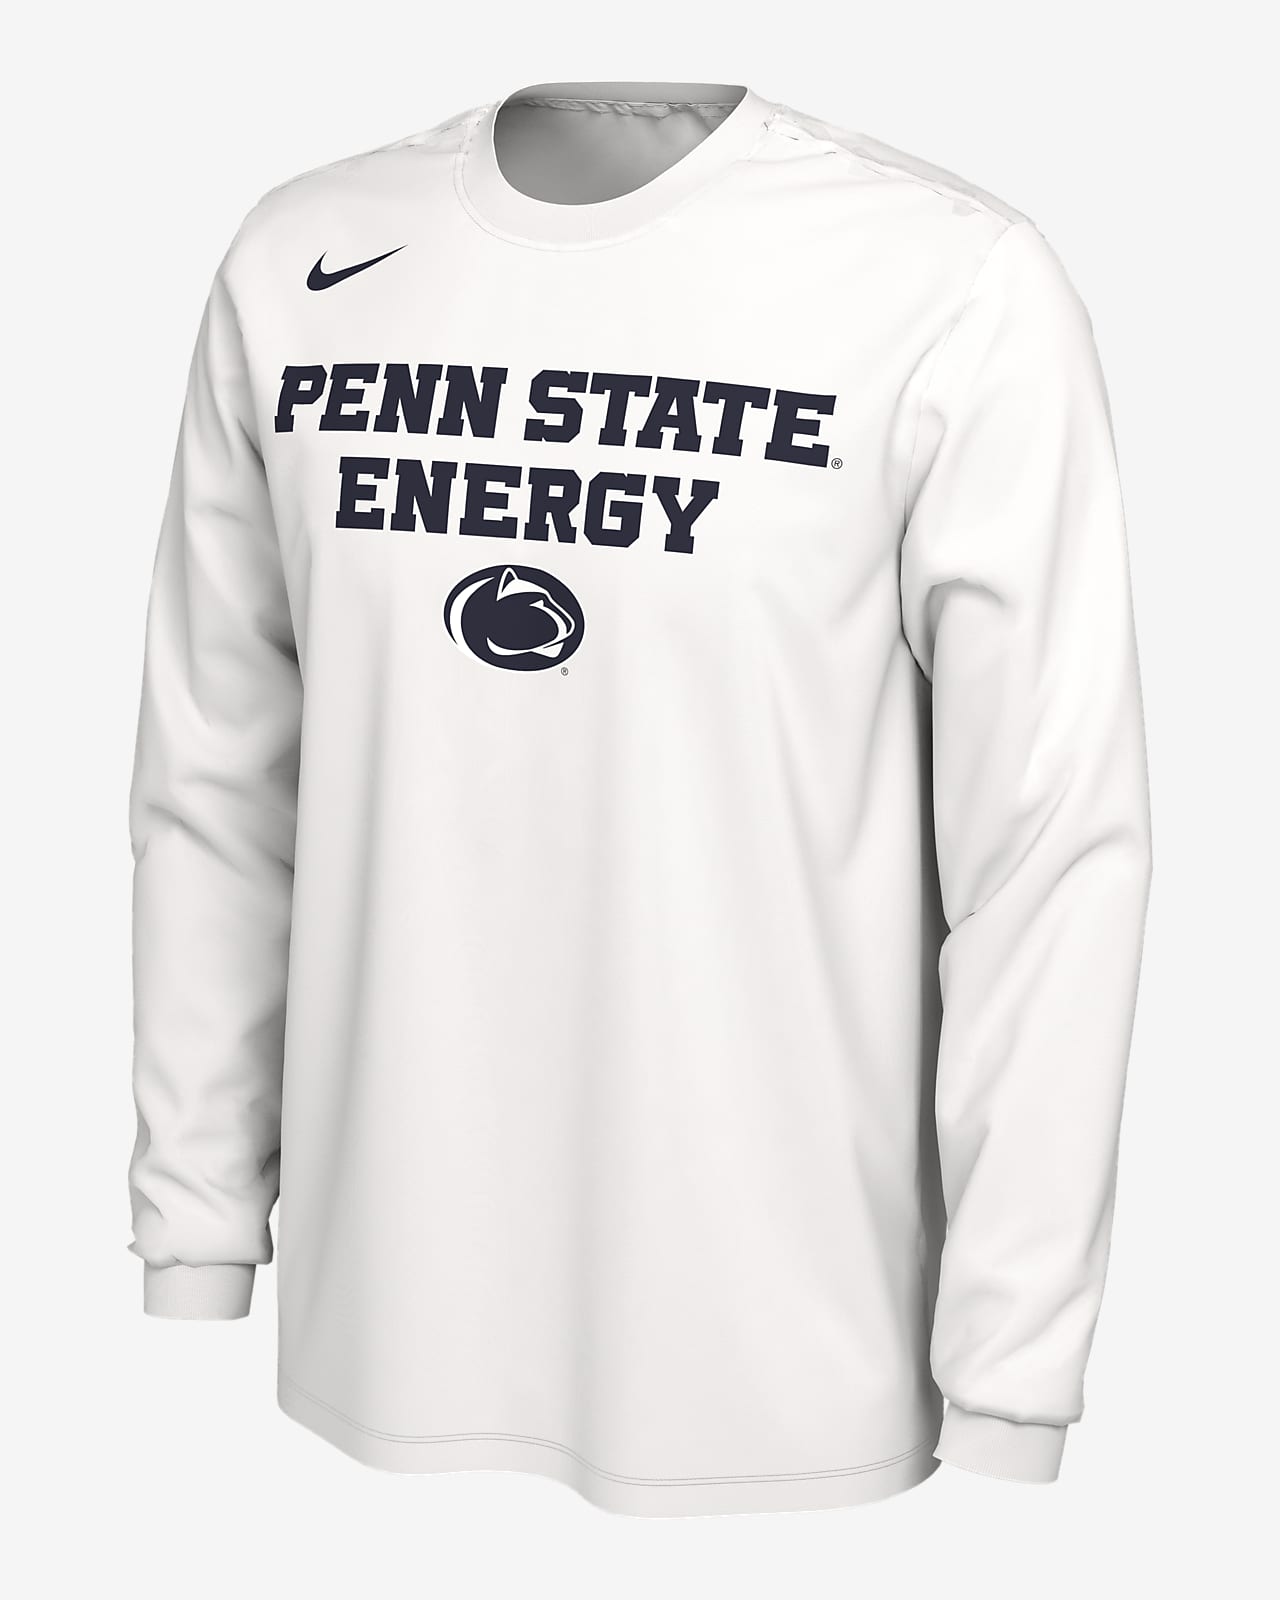 Penn State Men's Nike College Long-Sleeve T-Shirt